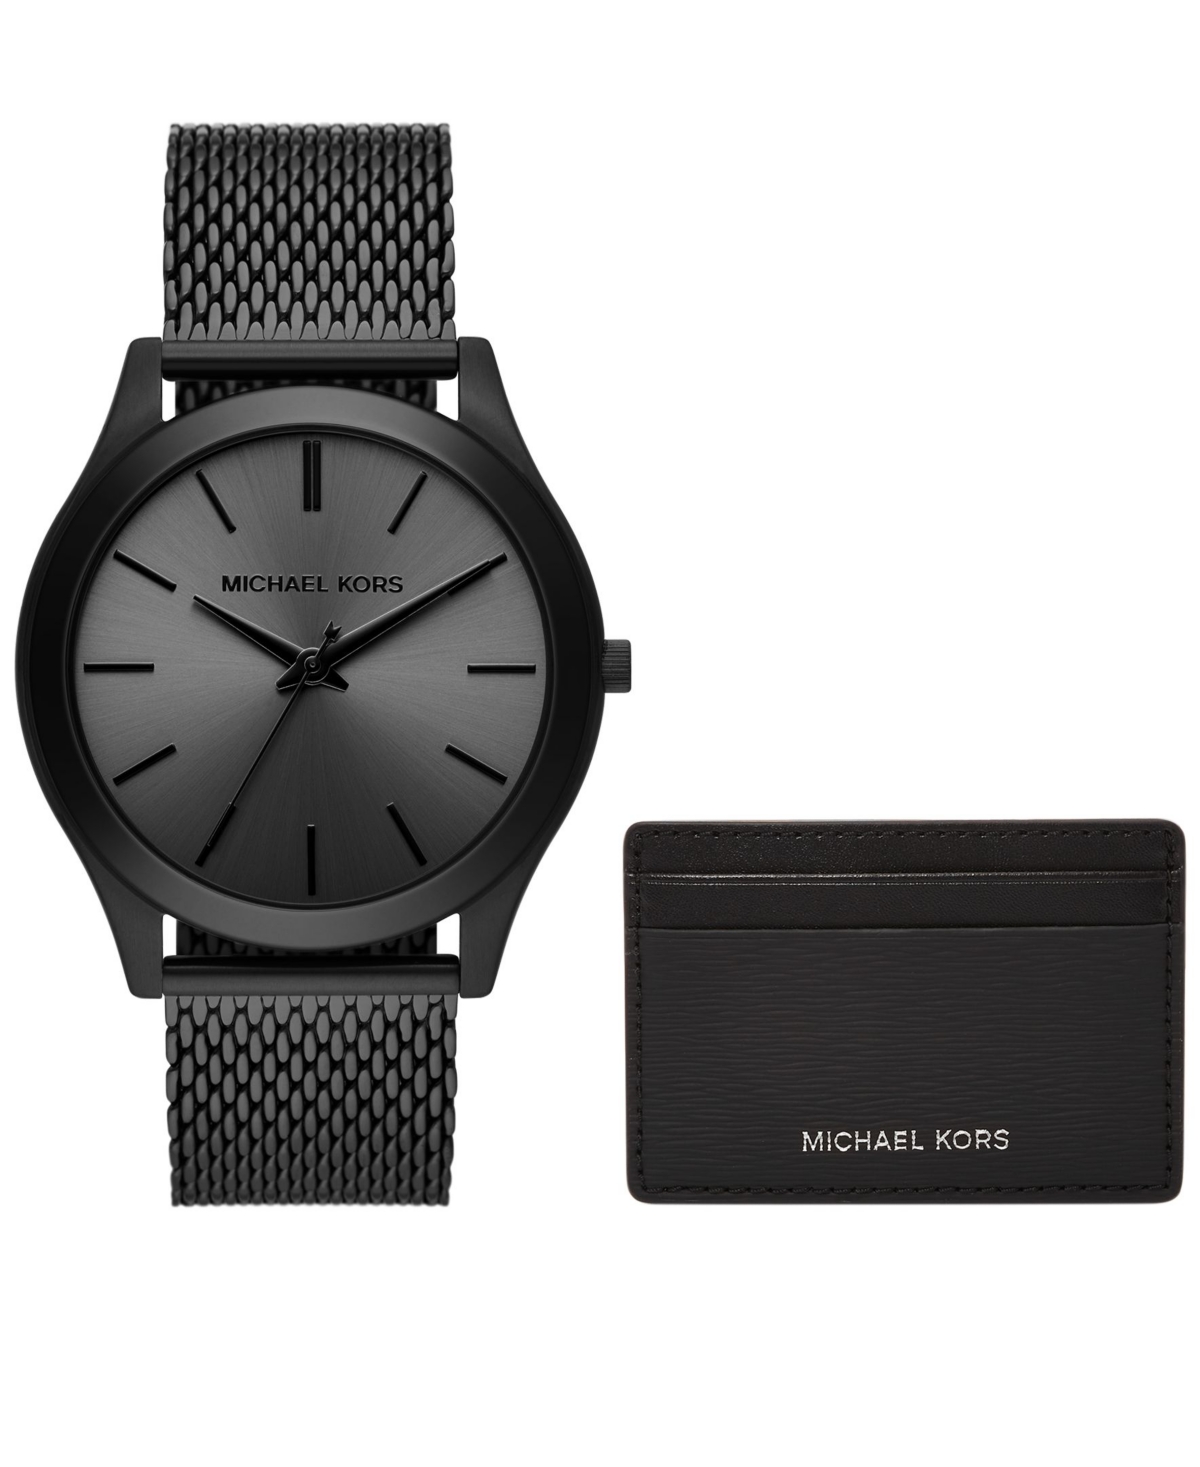 Michael Kors Men's Runway Three-hand Black Stainless Steel Mesh Watch 44mm And Wallet Gift Set